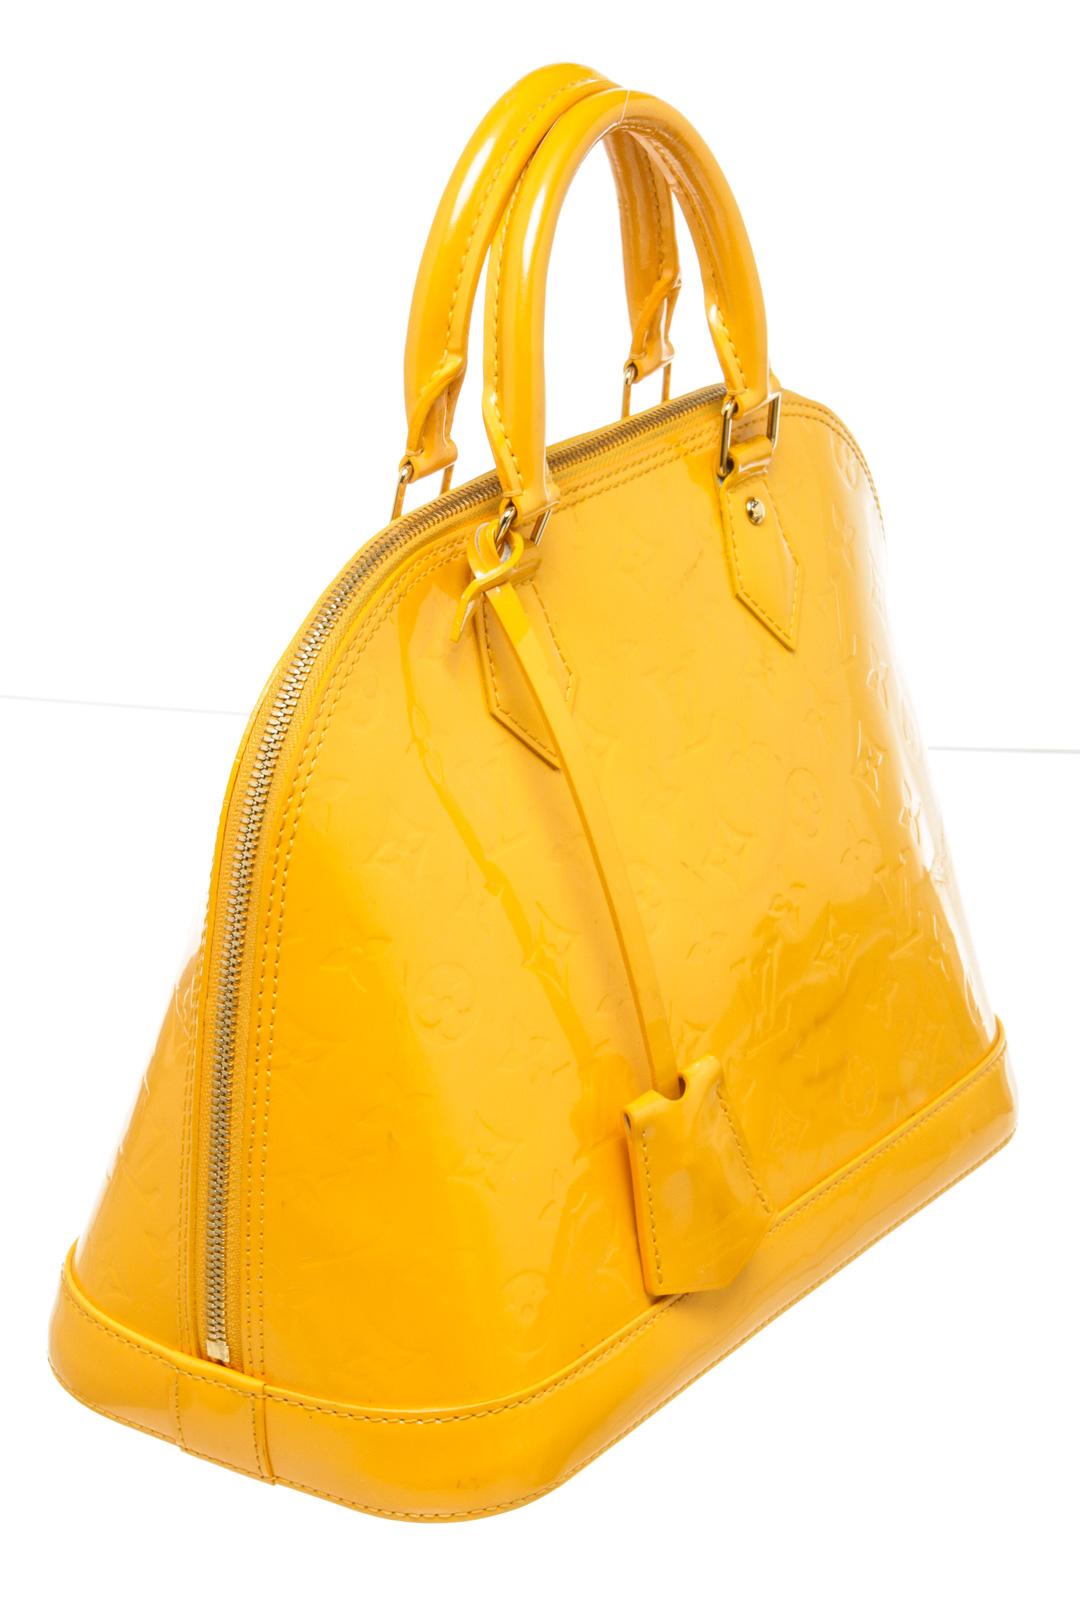 Louis Vuitton Yellow Vernis Leather Alma Satchel Bag 2